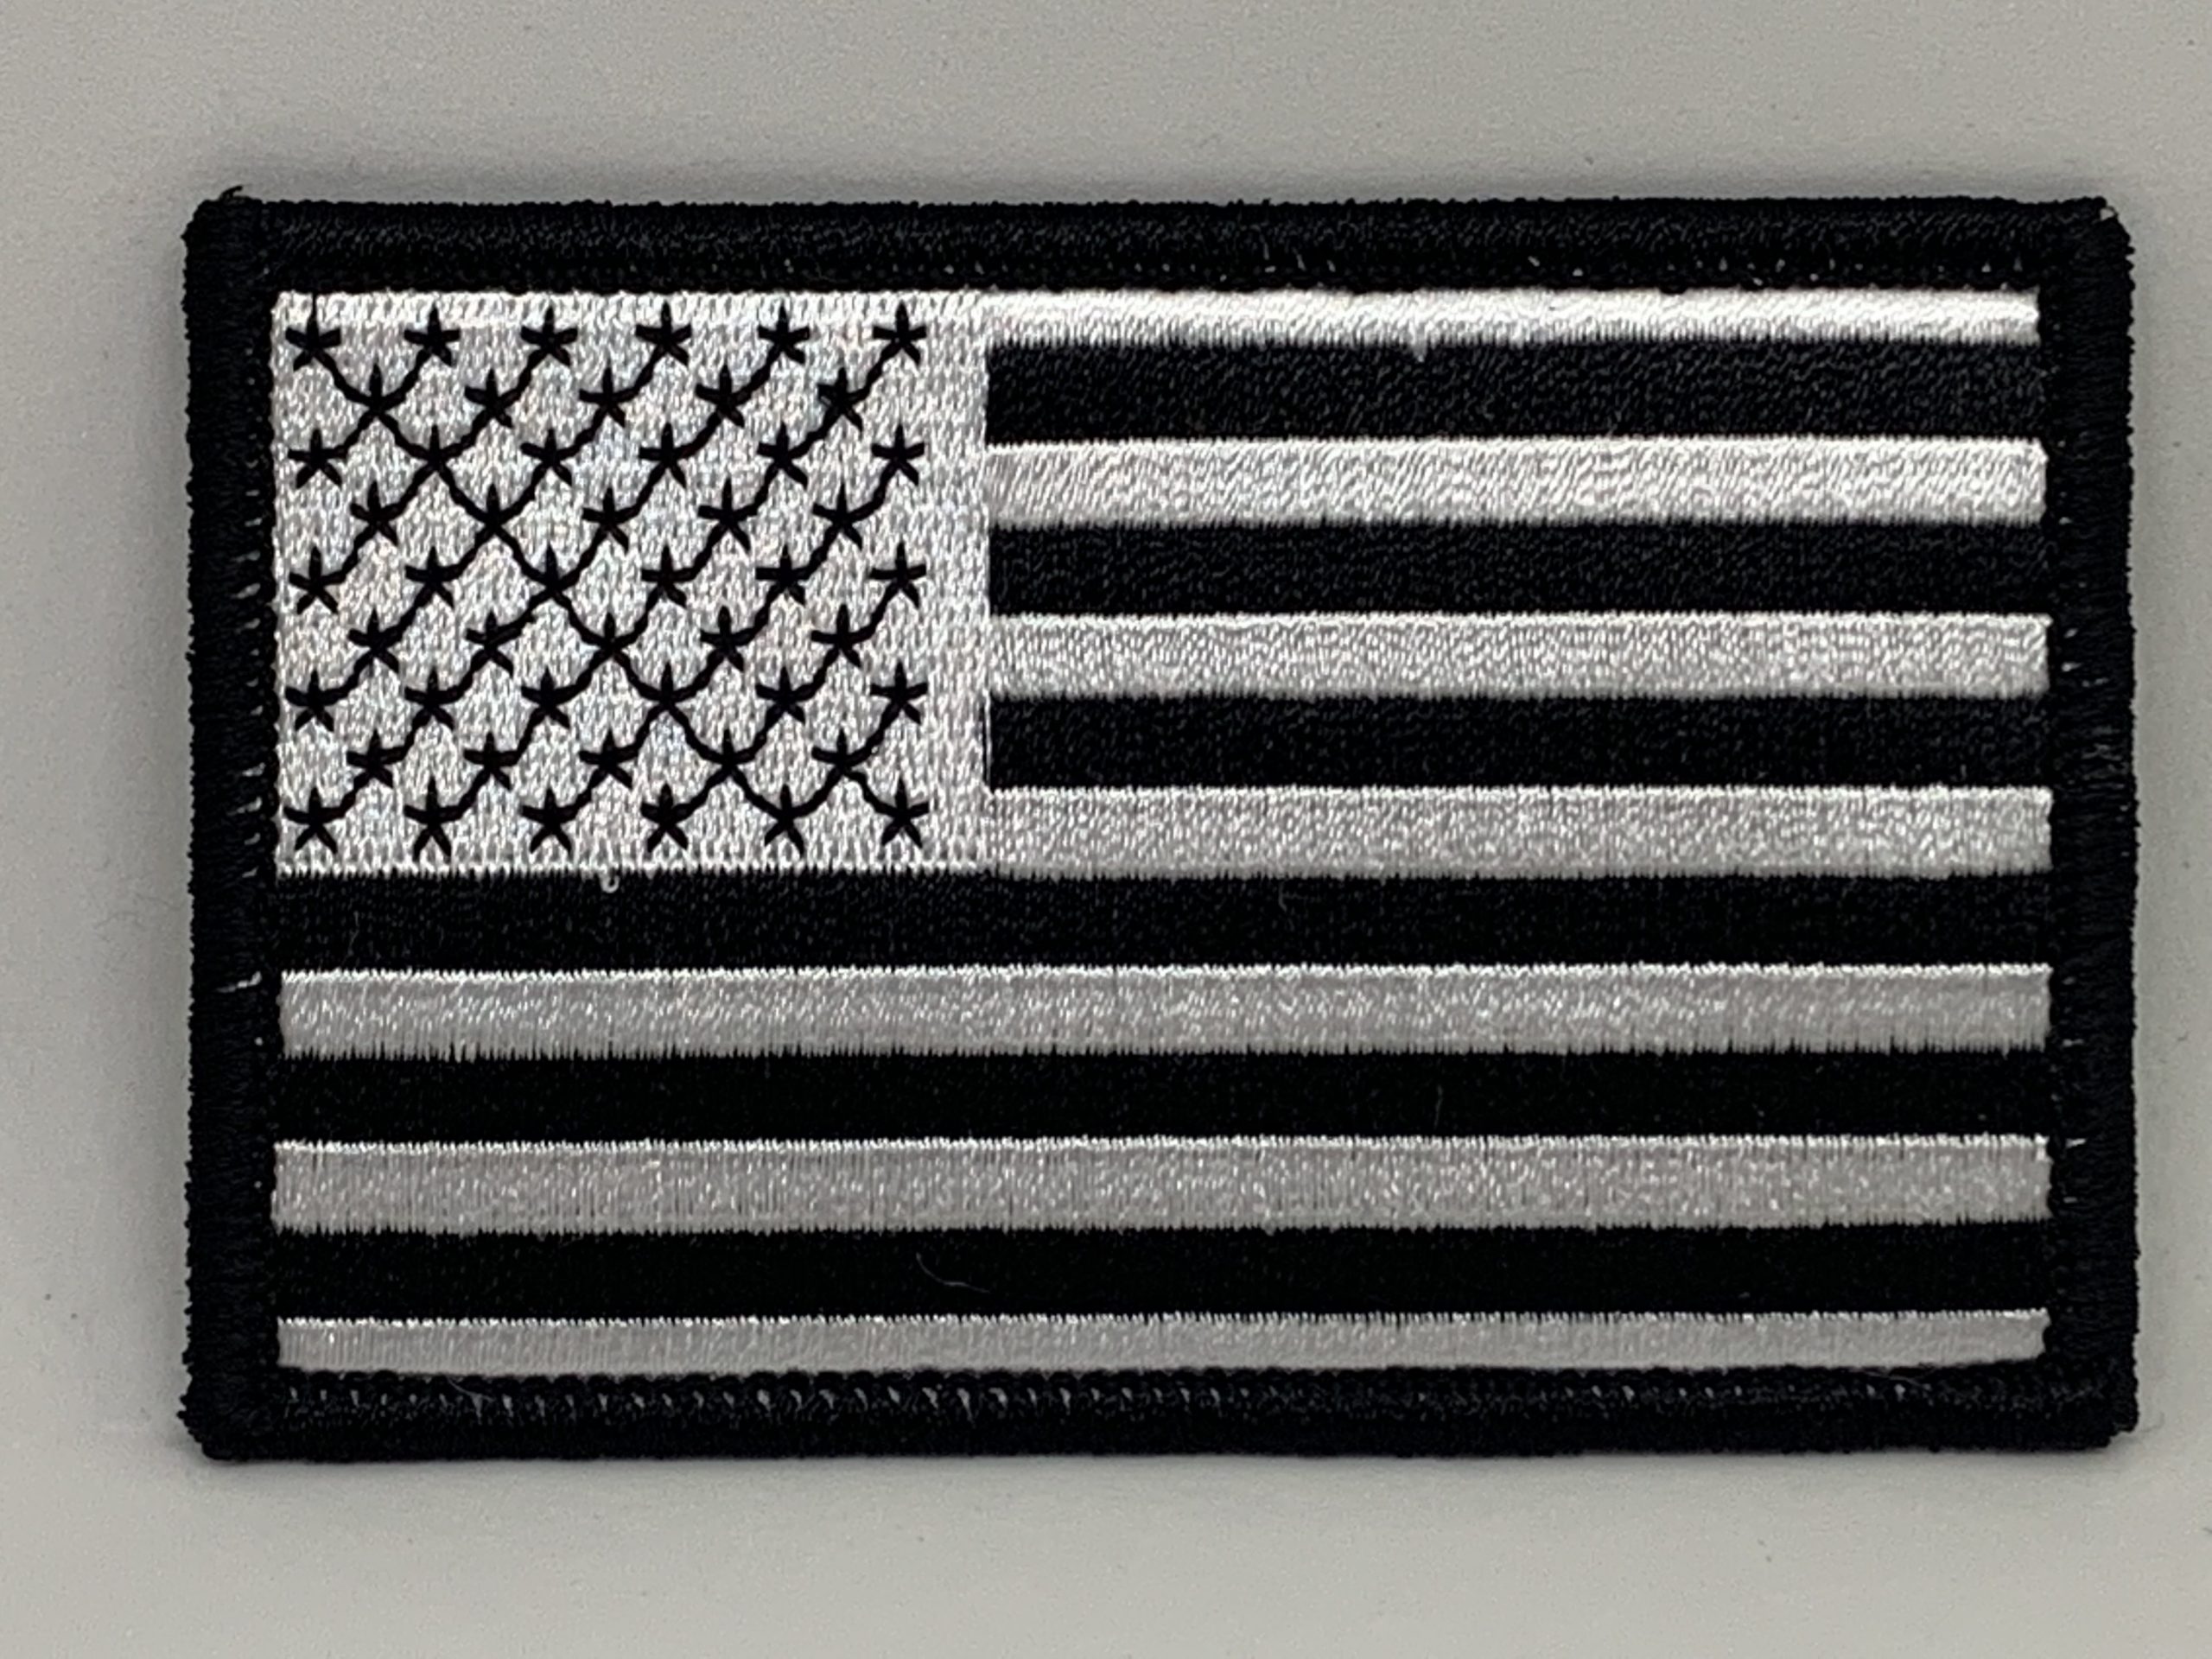 US Flag Patch 1x3 - Black-White